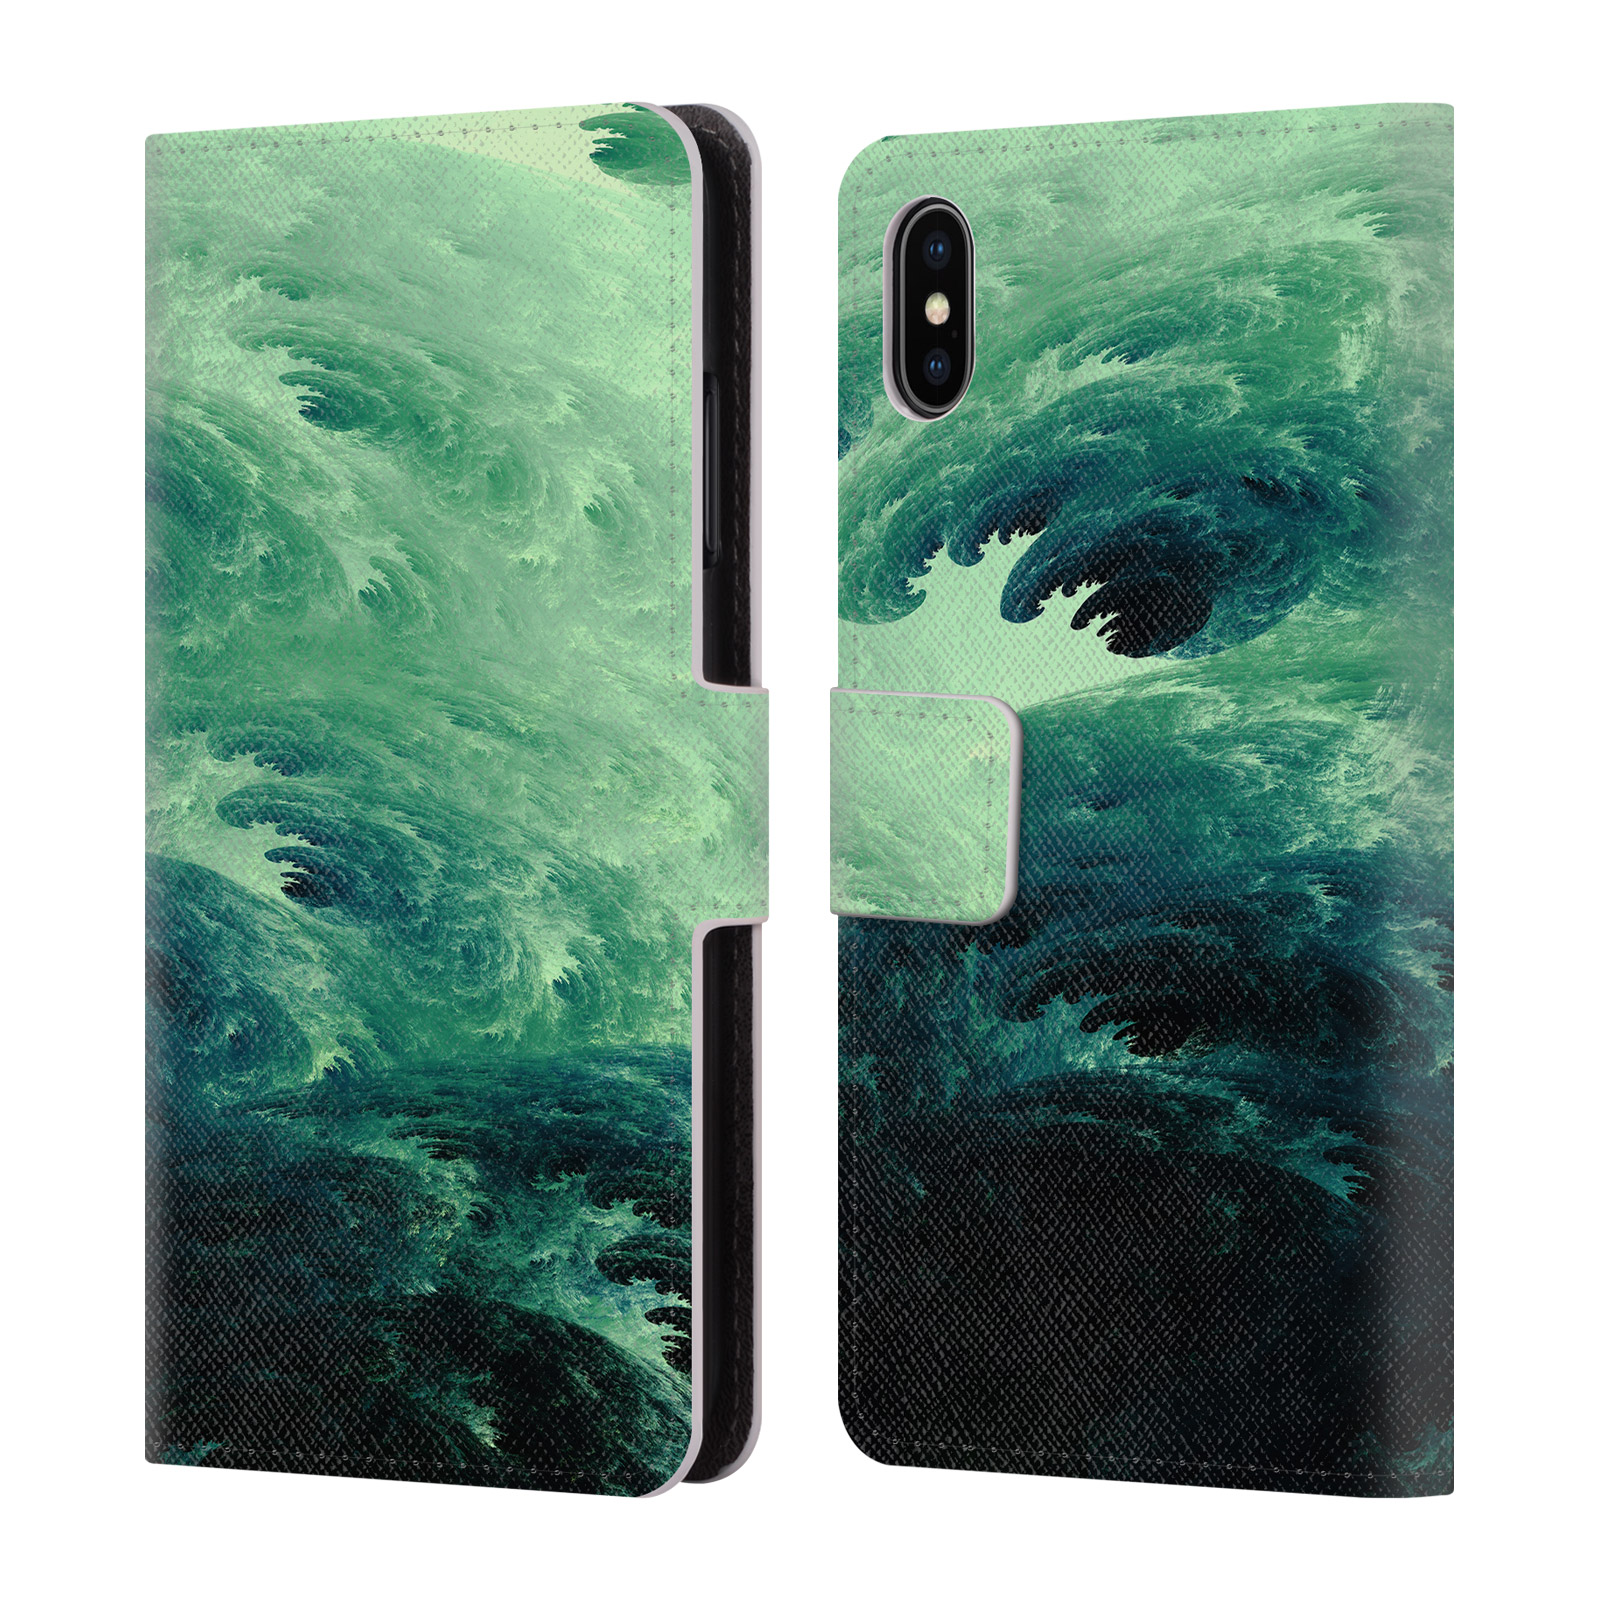 Pouzdro HEAD CASE pro mobil Apple Iphone XS MAX - Andi Greyscale umělec divoký oceán